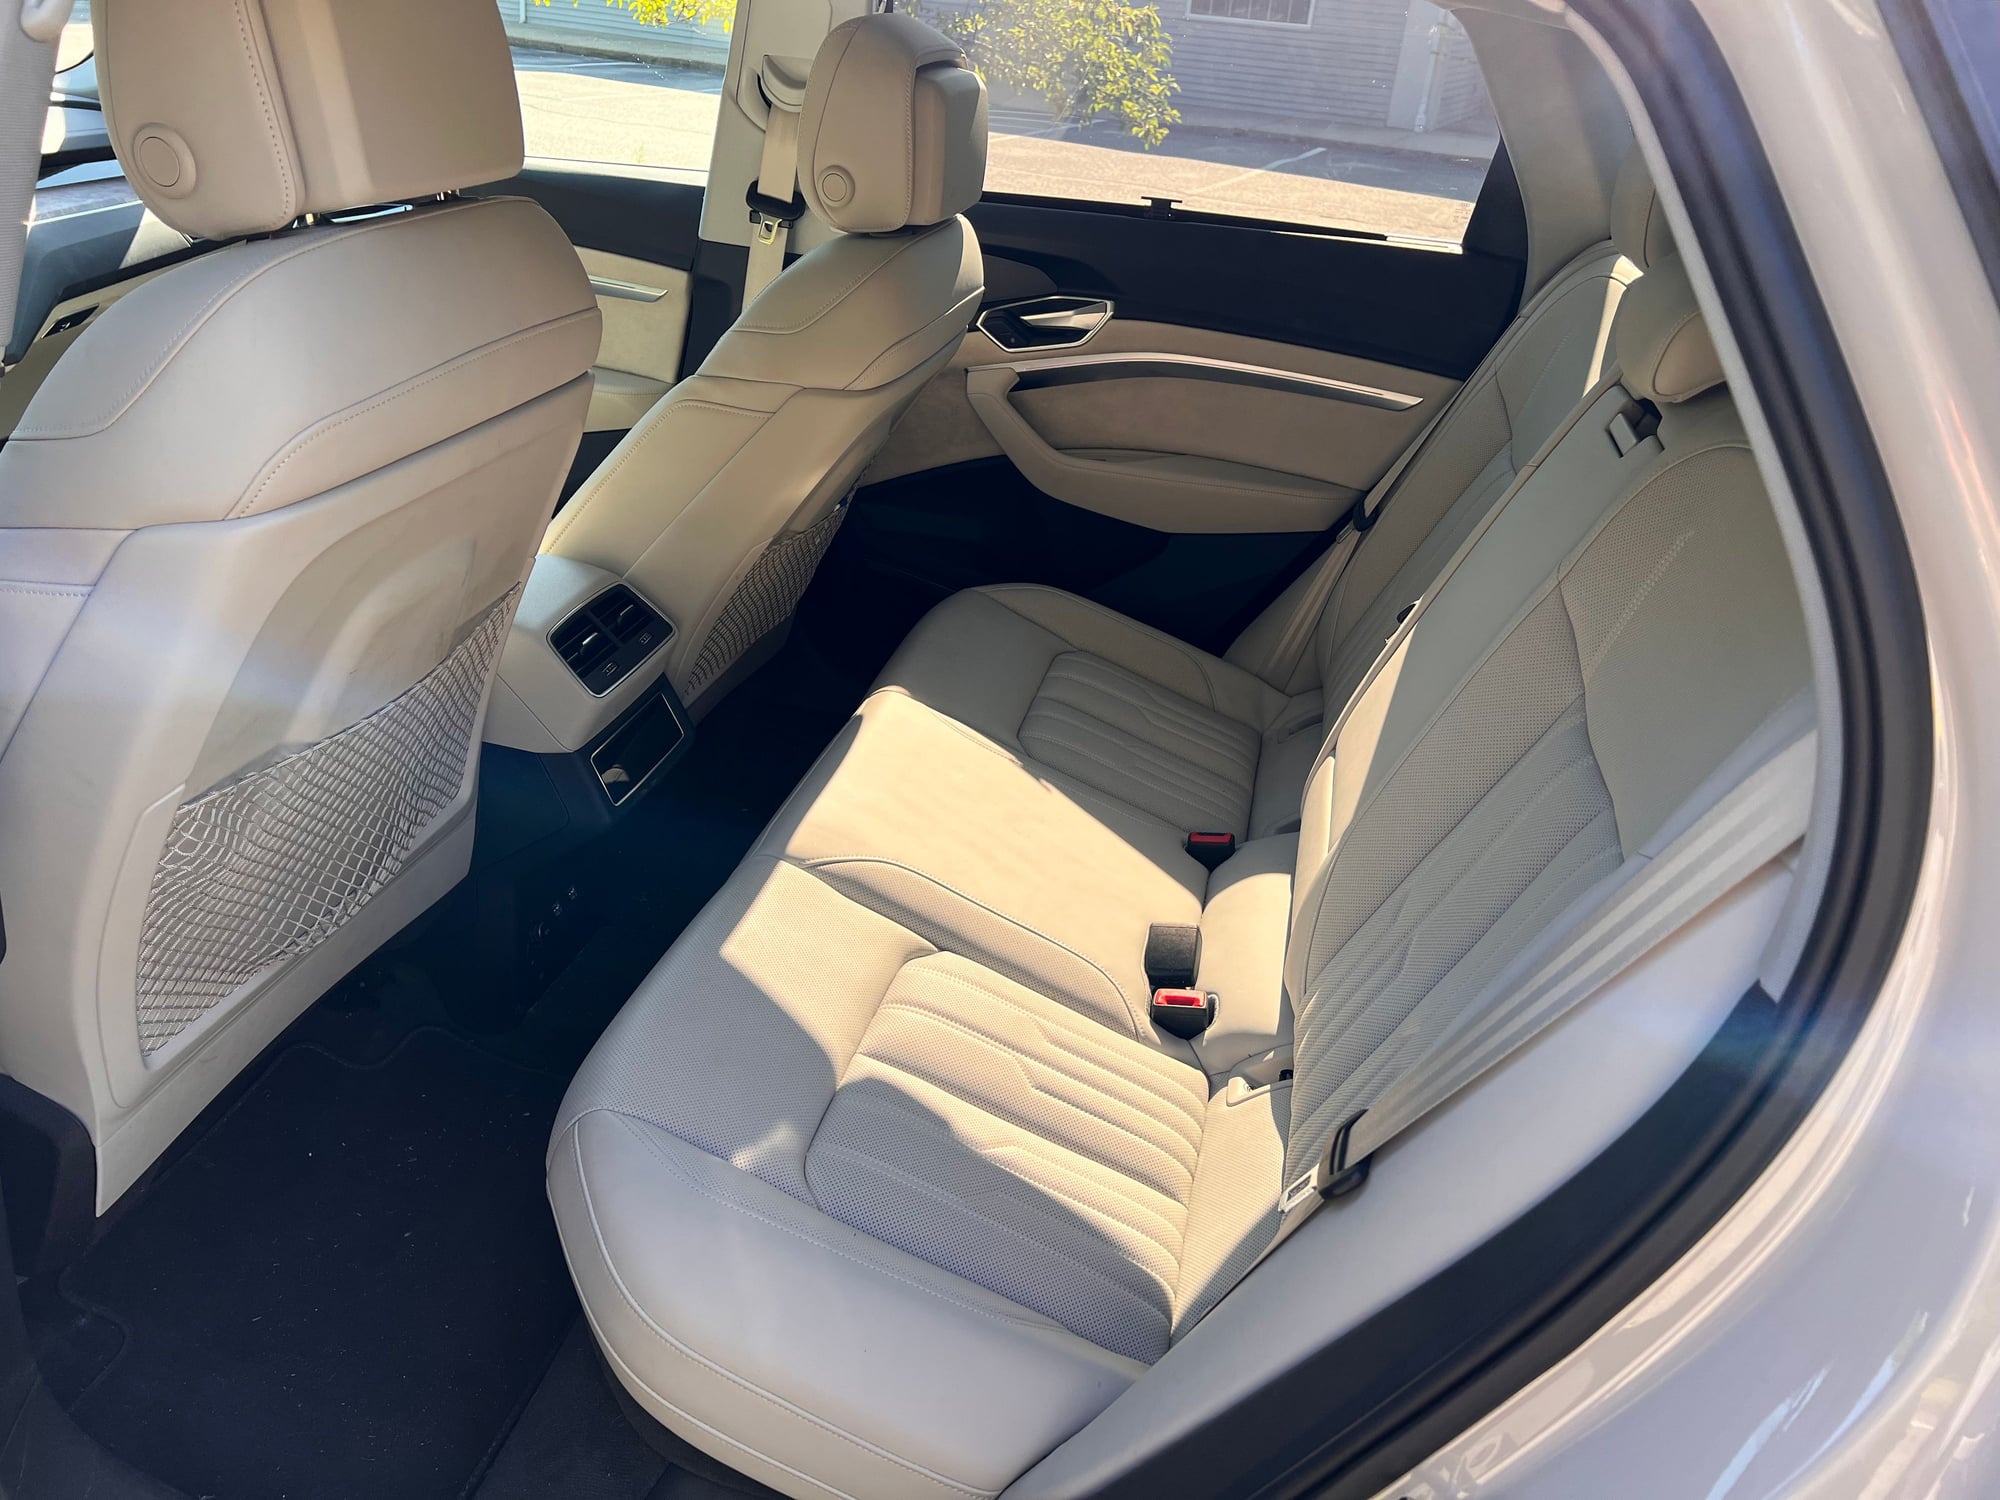 2019 Audi e-tron Quattro - e-tron:  Prestige, Siam Beige exterior and, Pearl Beige interior, excellent condition - Used - VIN wa1vaage0kb015822 - 25,100 Miles - Other - AWD - SUV - Beige - Norwell, MA 02061, United States